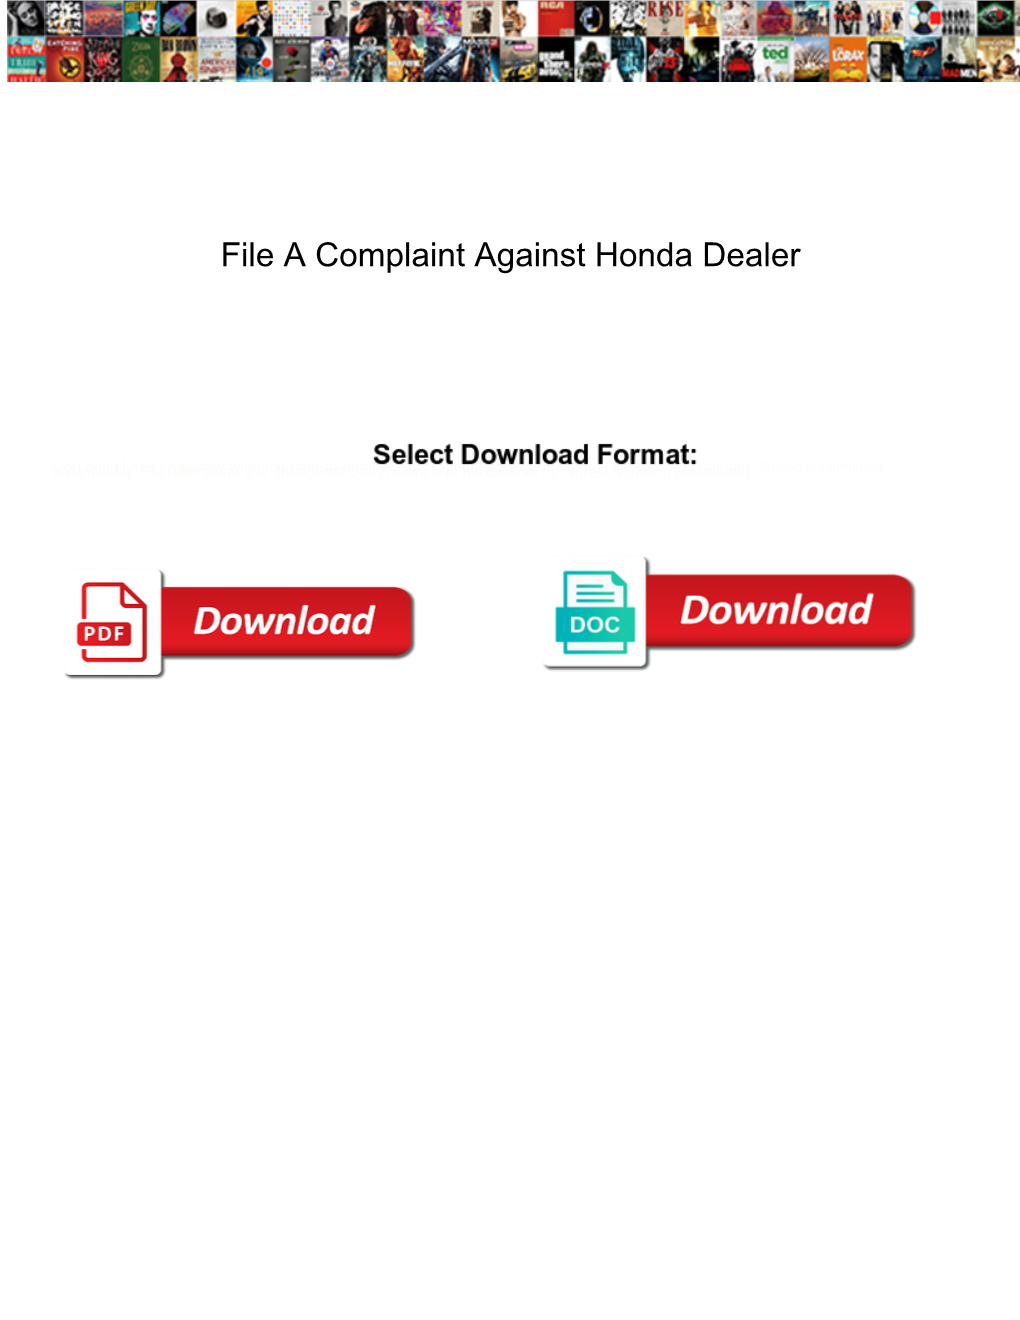 File a Complaint Against Honda Dealer